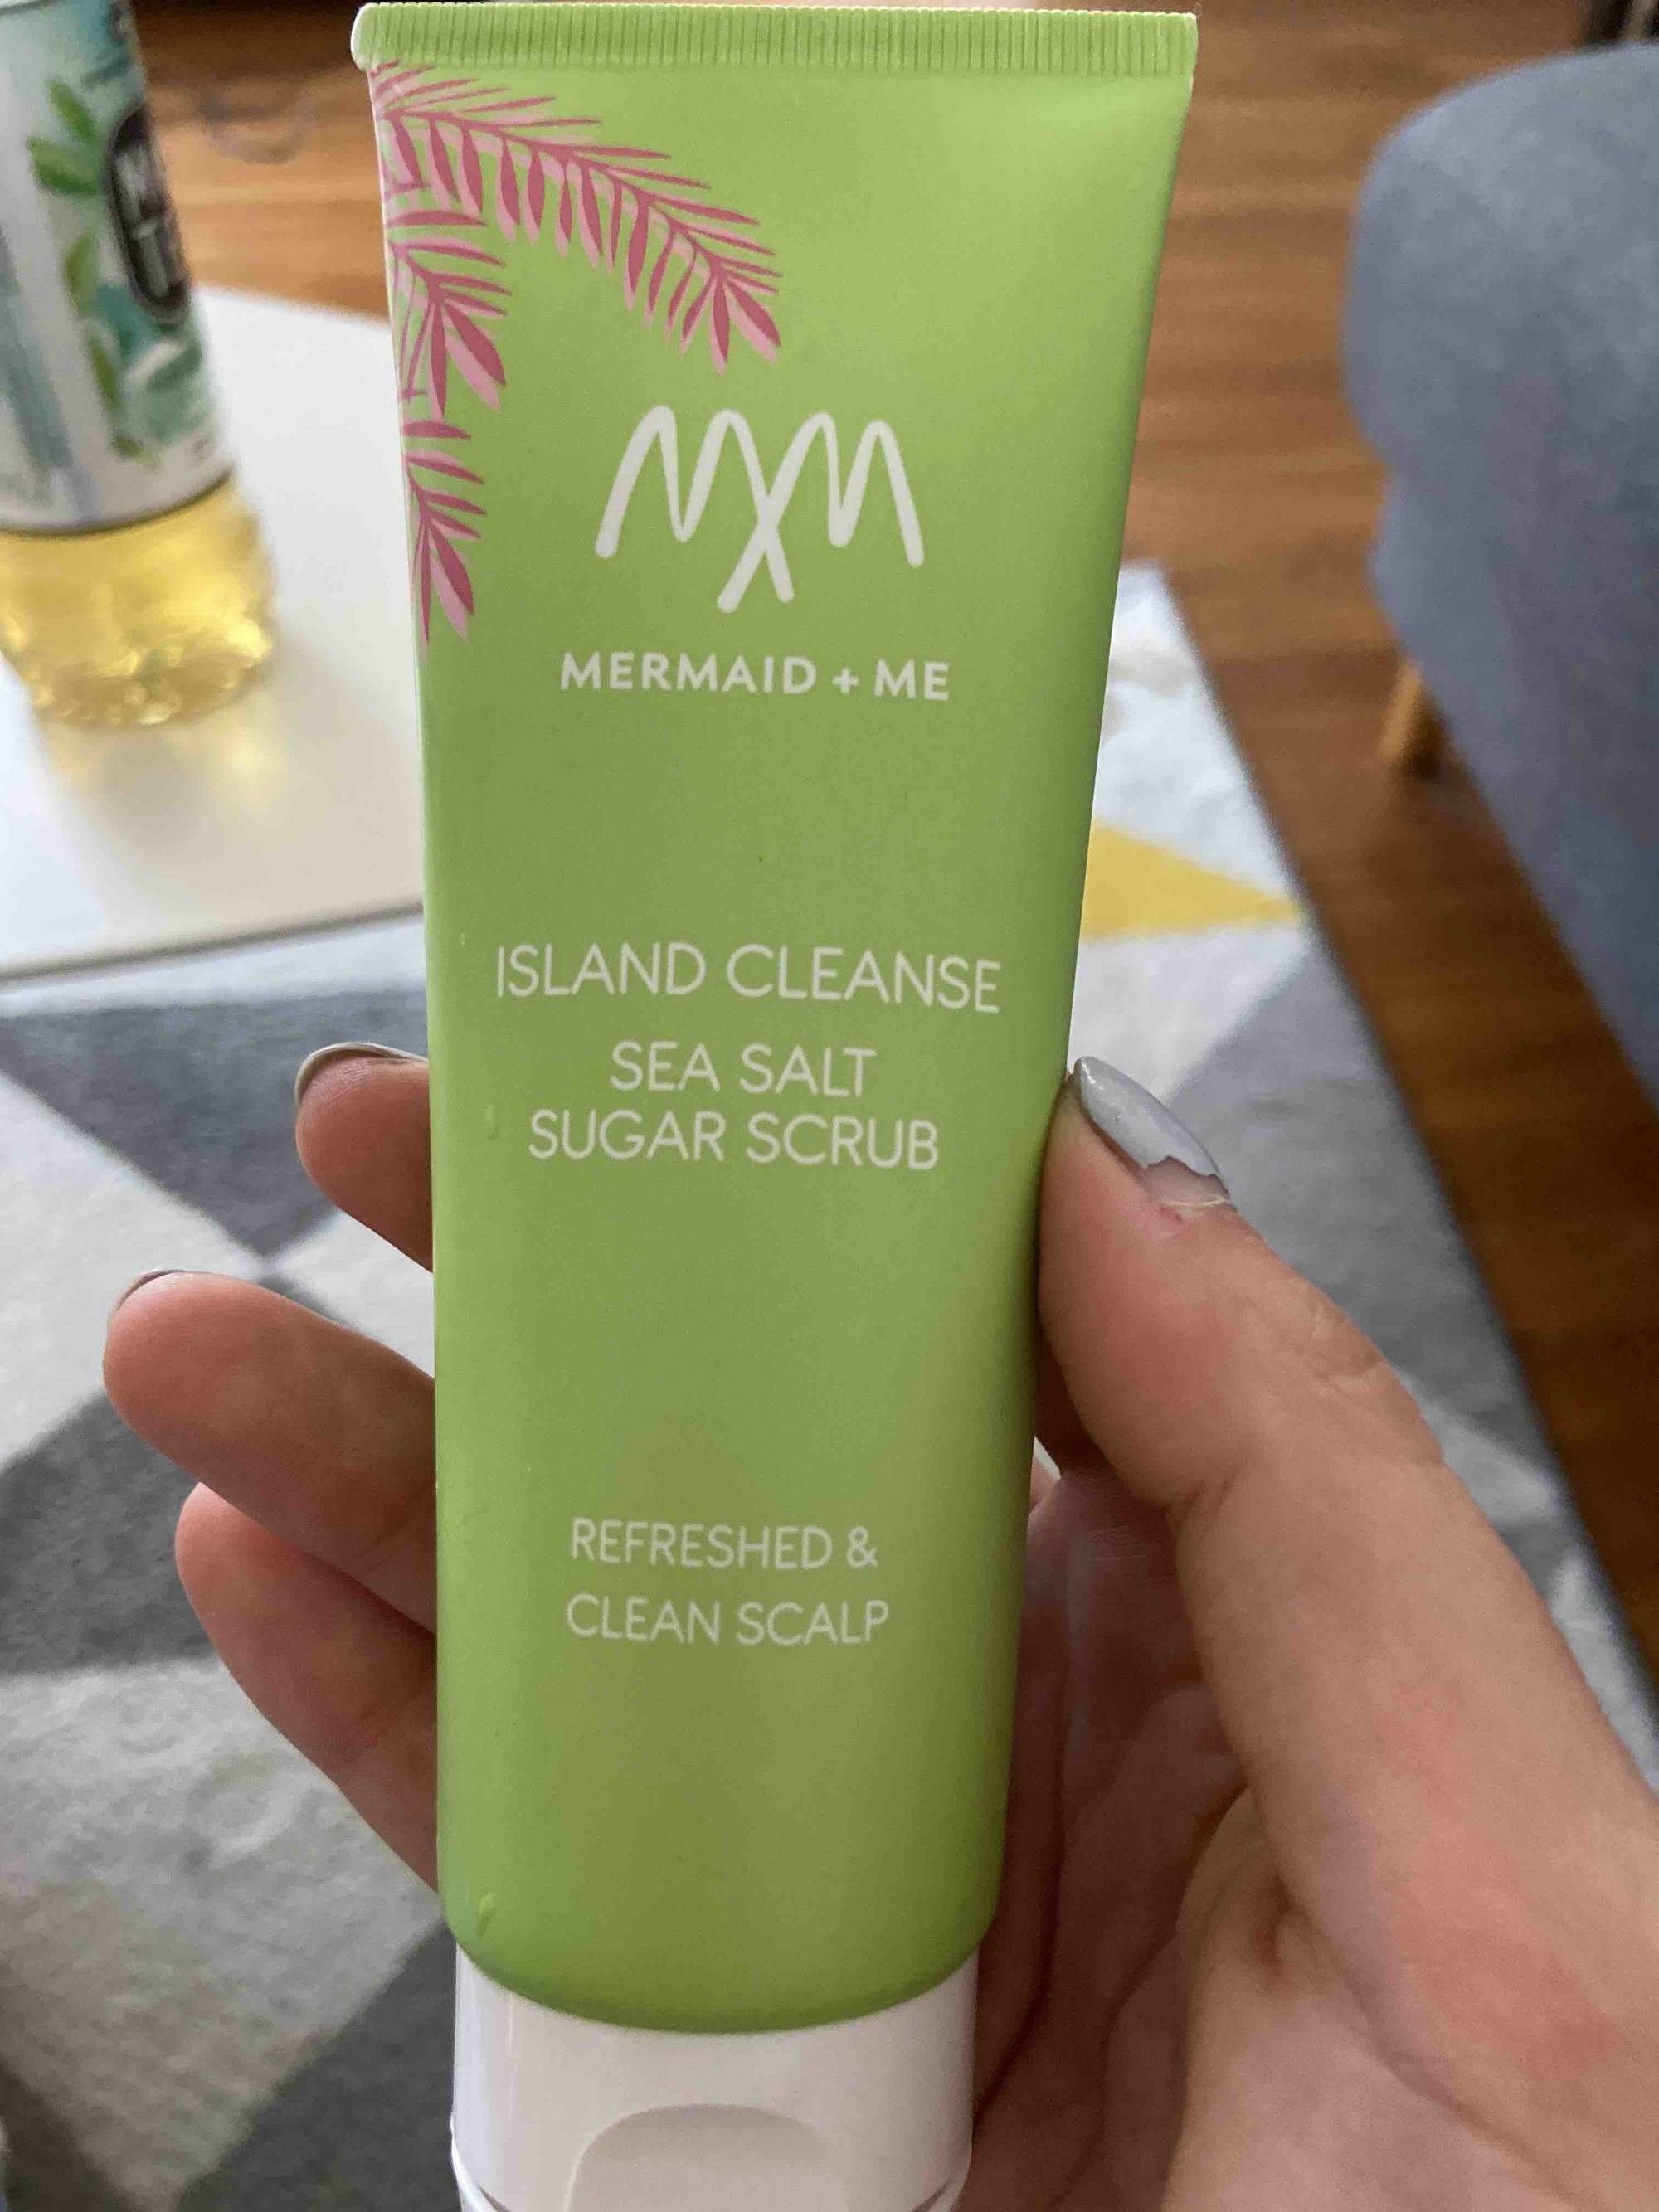 MERMAID + ME - Island cleanse - Sea salt sugar scrub